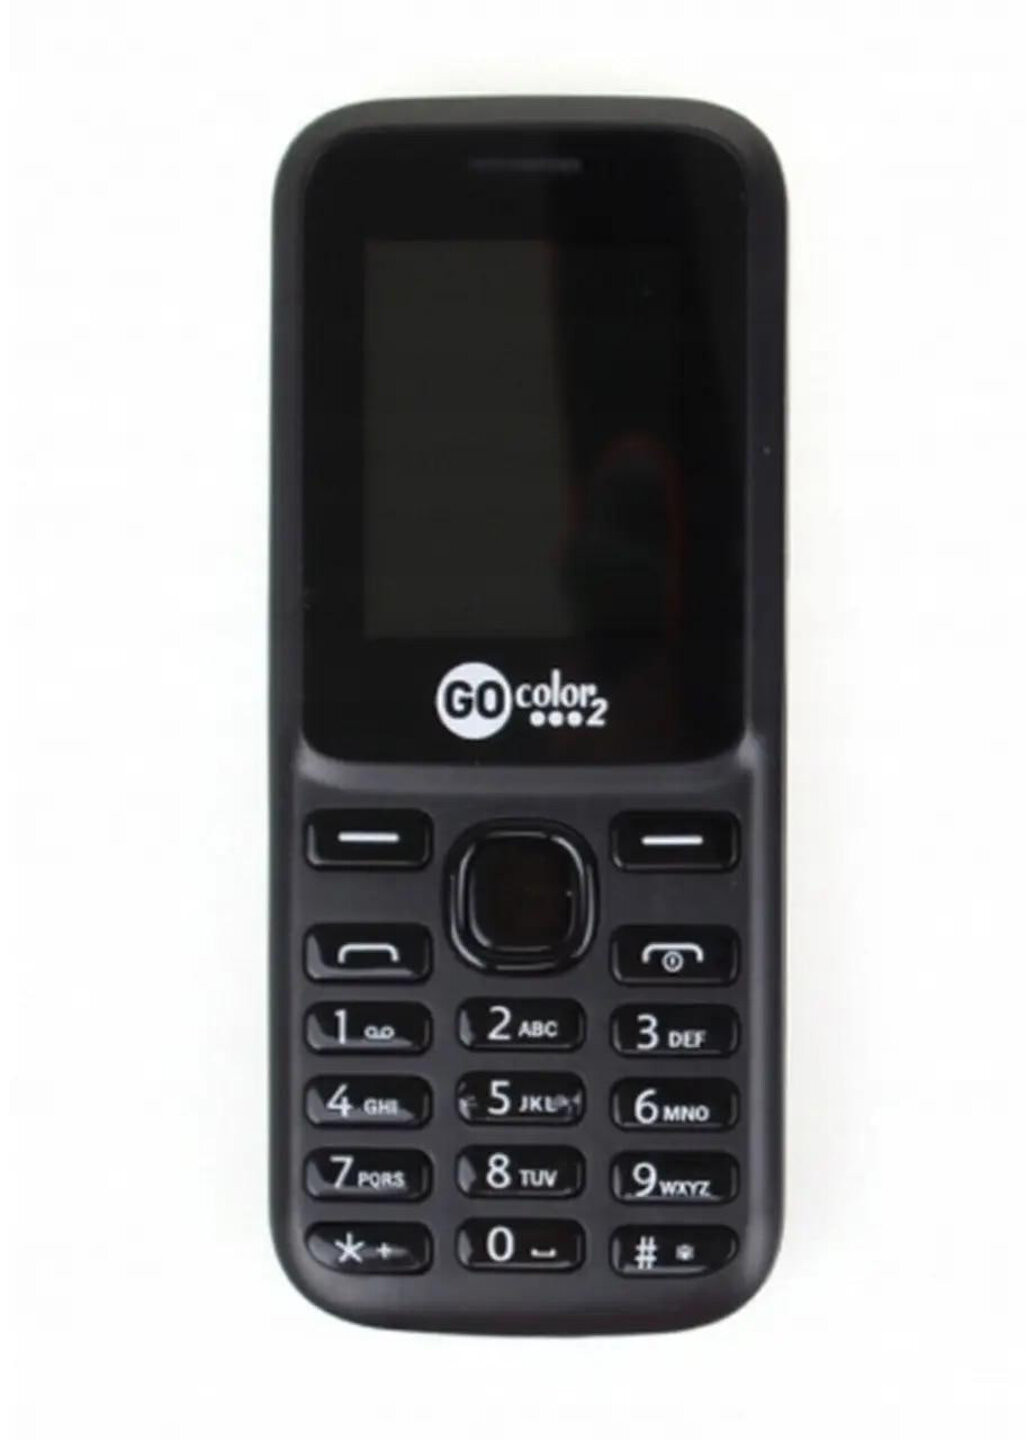 Мобильный телефон GO color 2 "Бабушкафон" SONQUI 11,4 х 4,8 х 1,3 см Lidl (263942020)